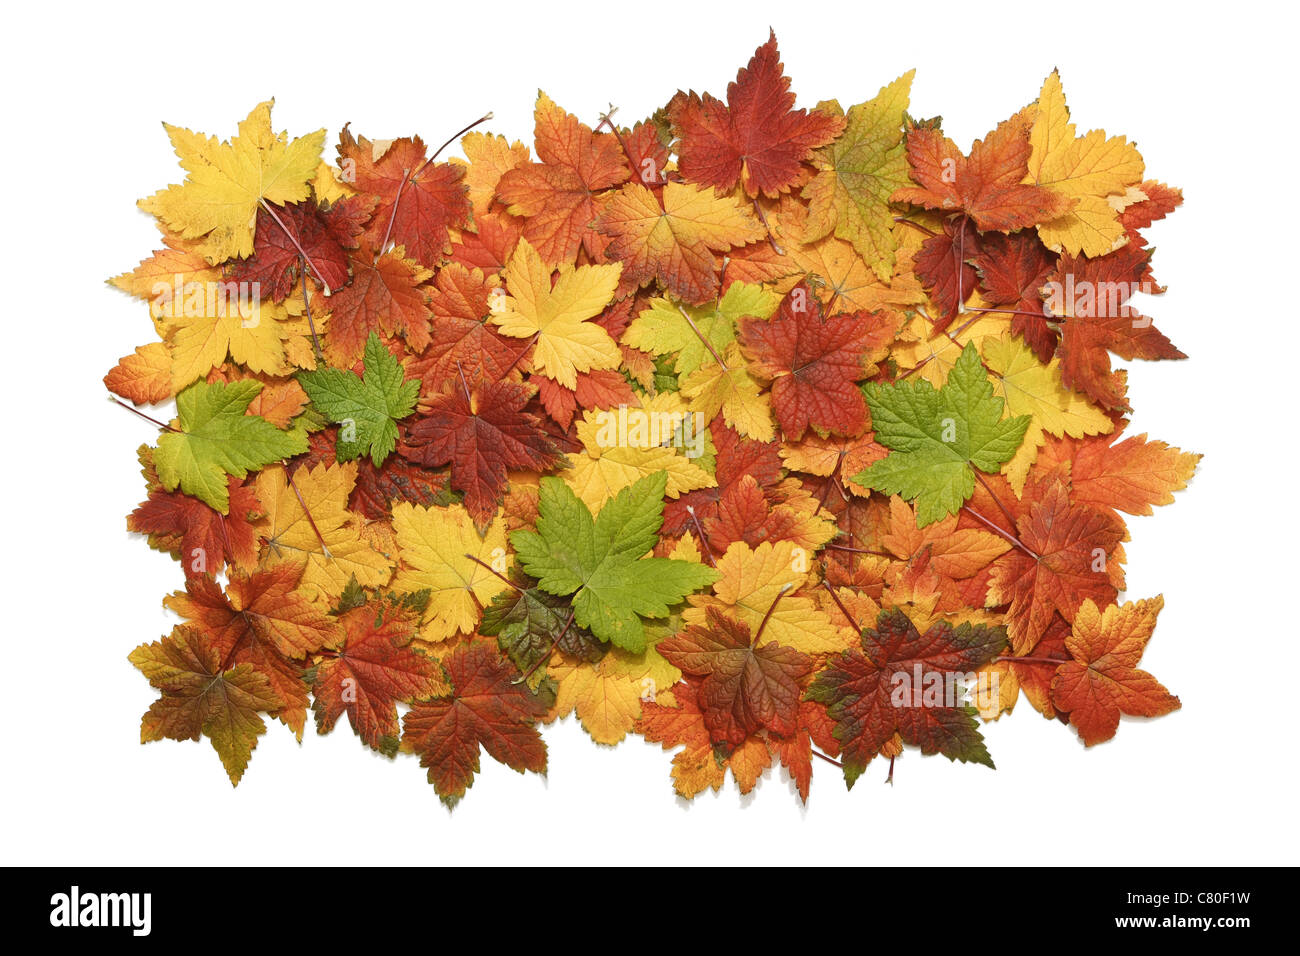 Big pile of autumn leaves isolated on white background Stock Photo